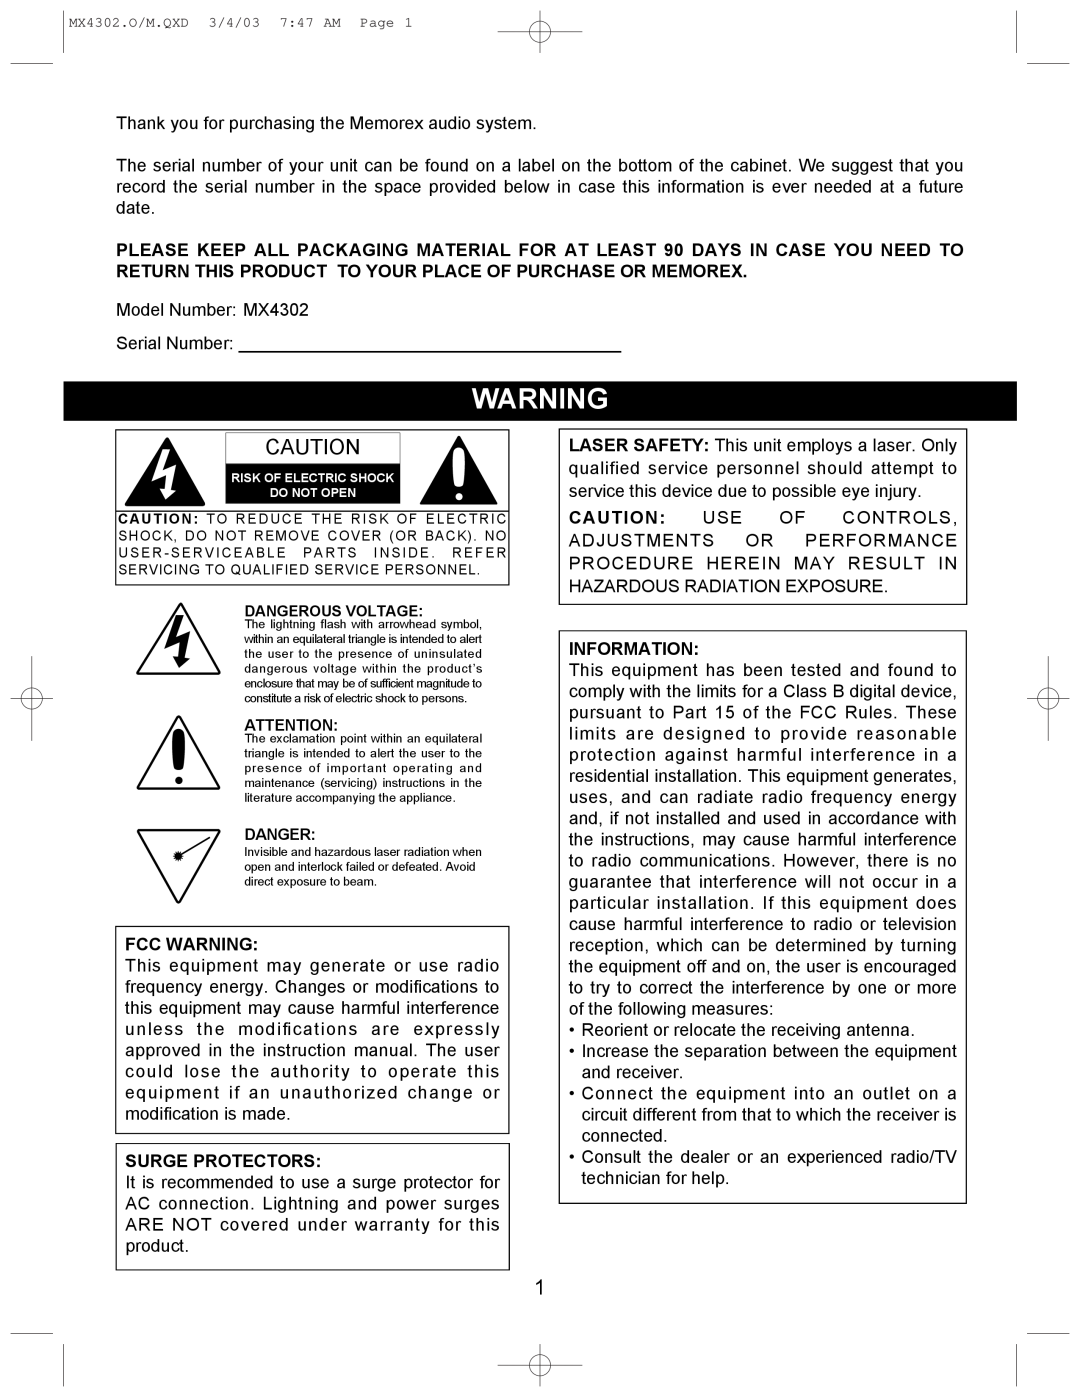 Memorex MX4302 operating instructions Fcc Warning, Surge Protectors, Information 